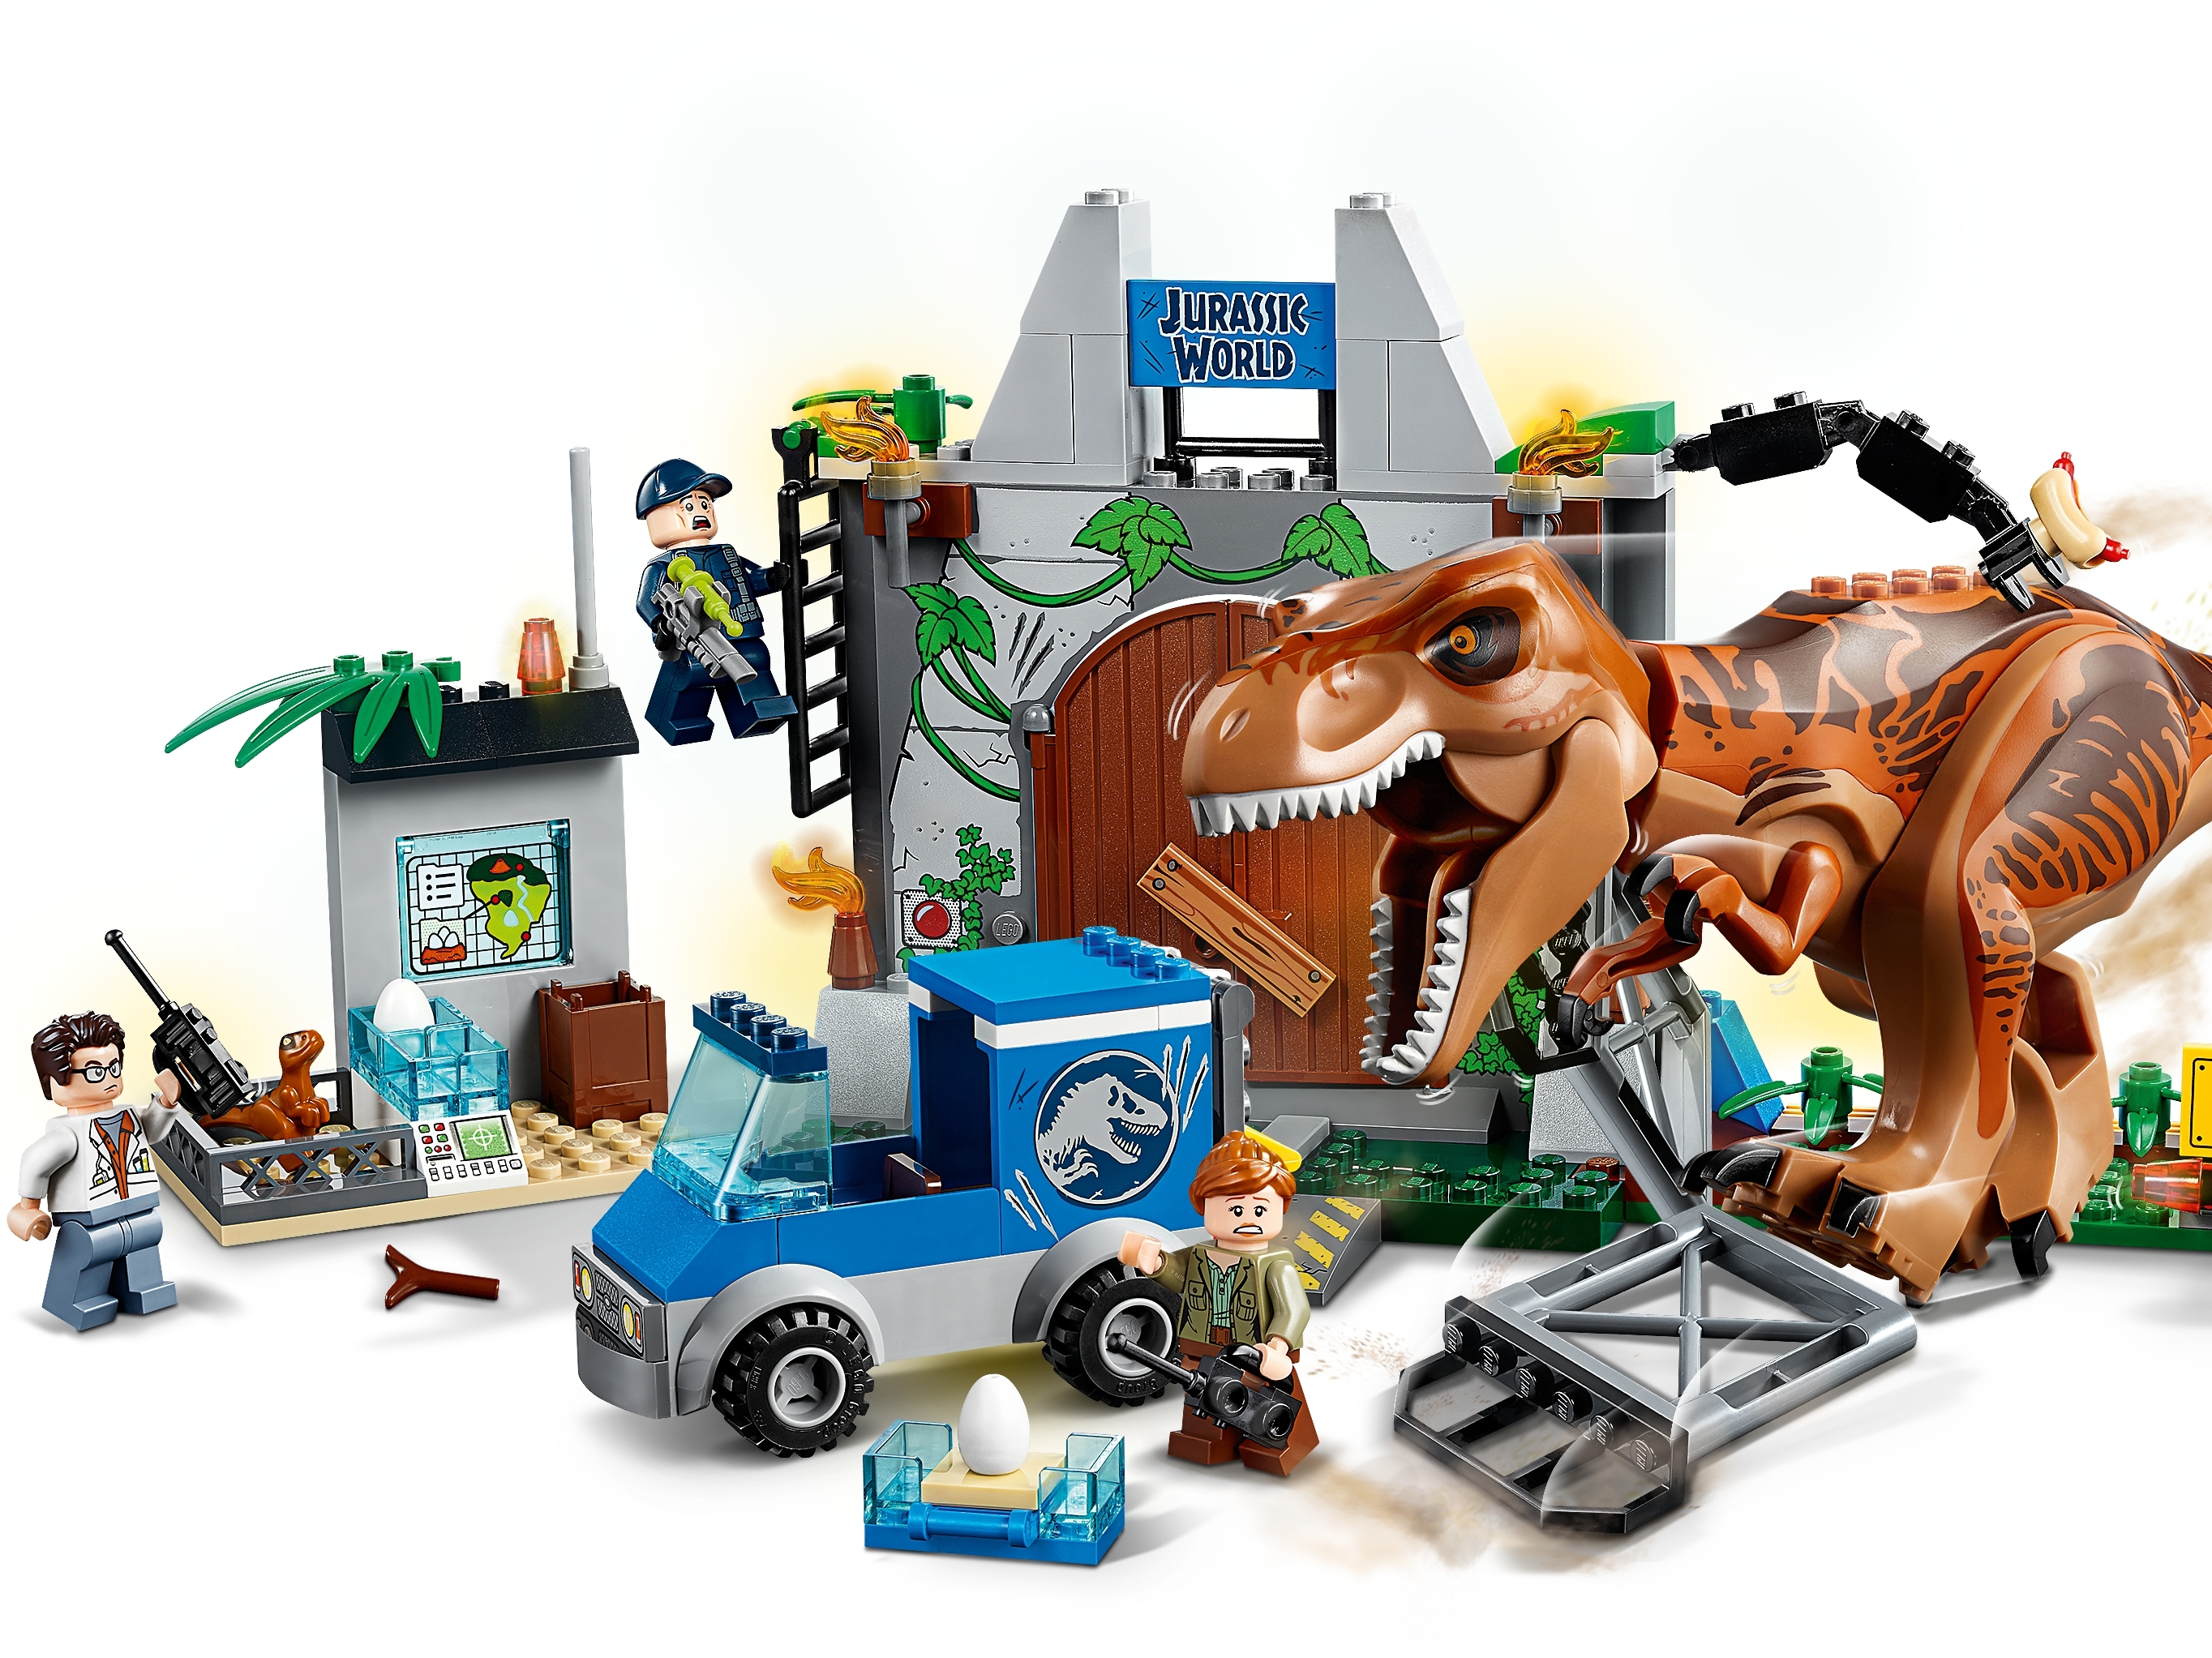 Details about   LEGO Jurassic World 10758 JURASSIC PARK GUARD W/ TRANQUILIZER Genuine Minifigure